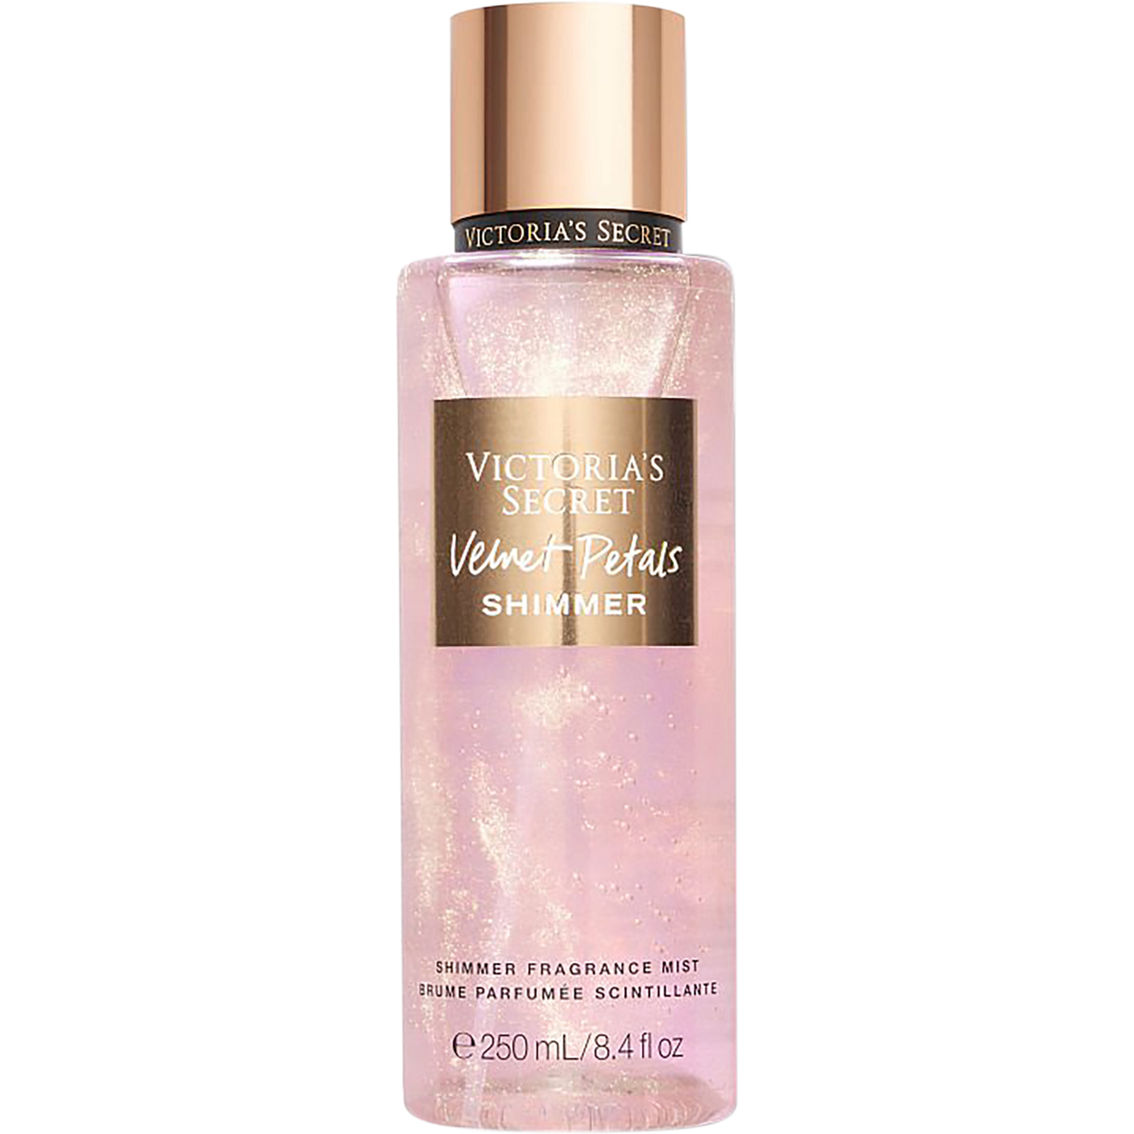 Victoria's Secret Velvet Petals Shimmer Fragrance Mist 8.4 oz.